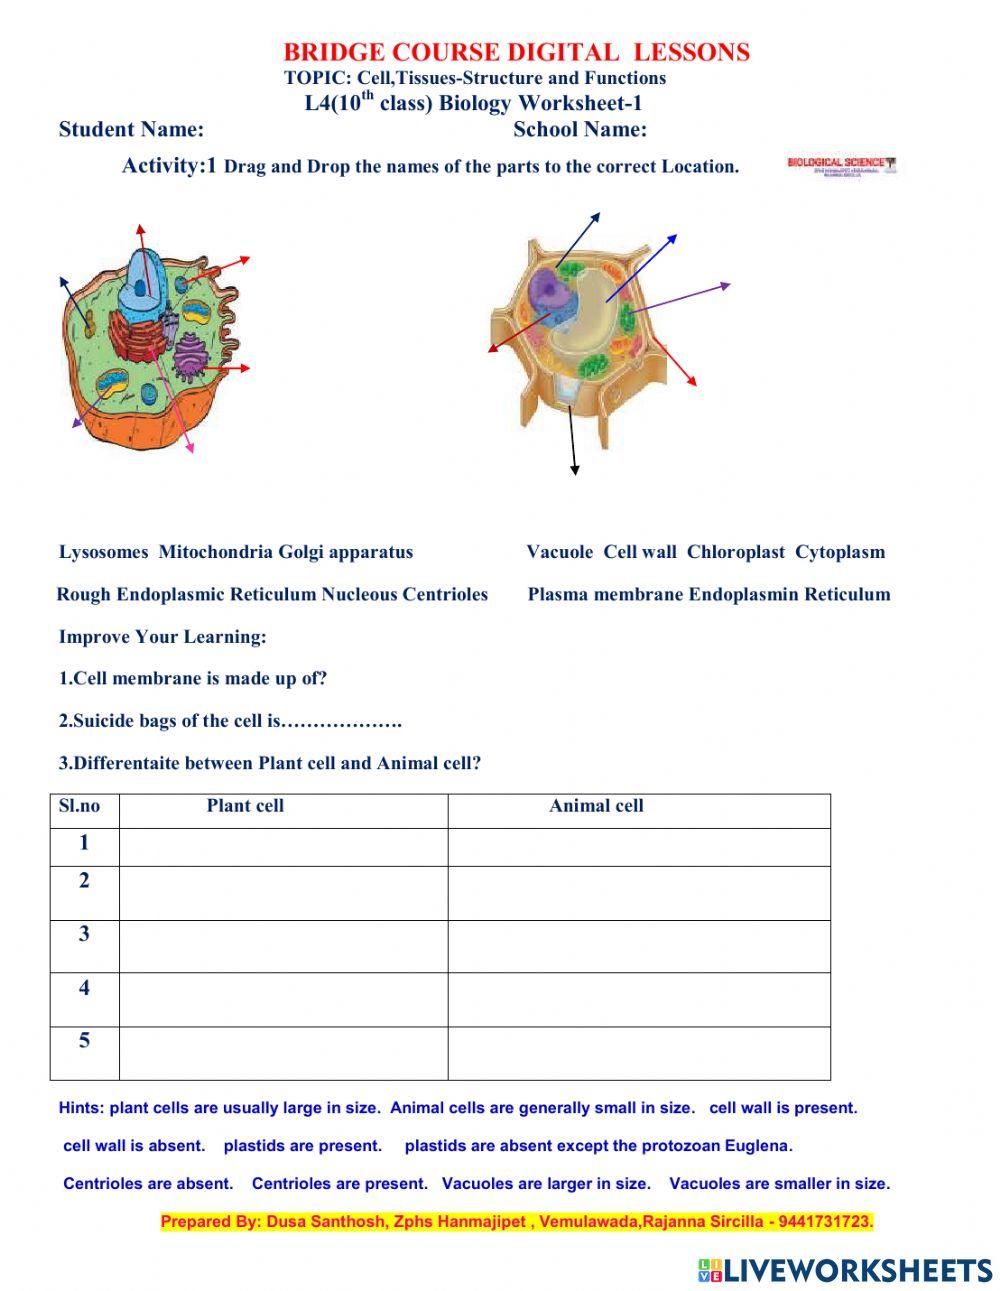 L4(10th class) Biology Worksheet-1